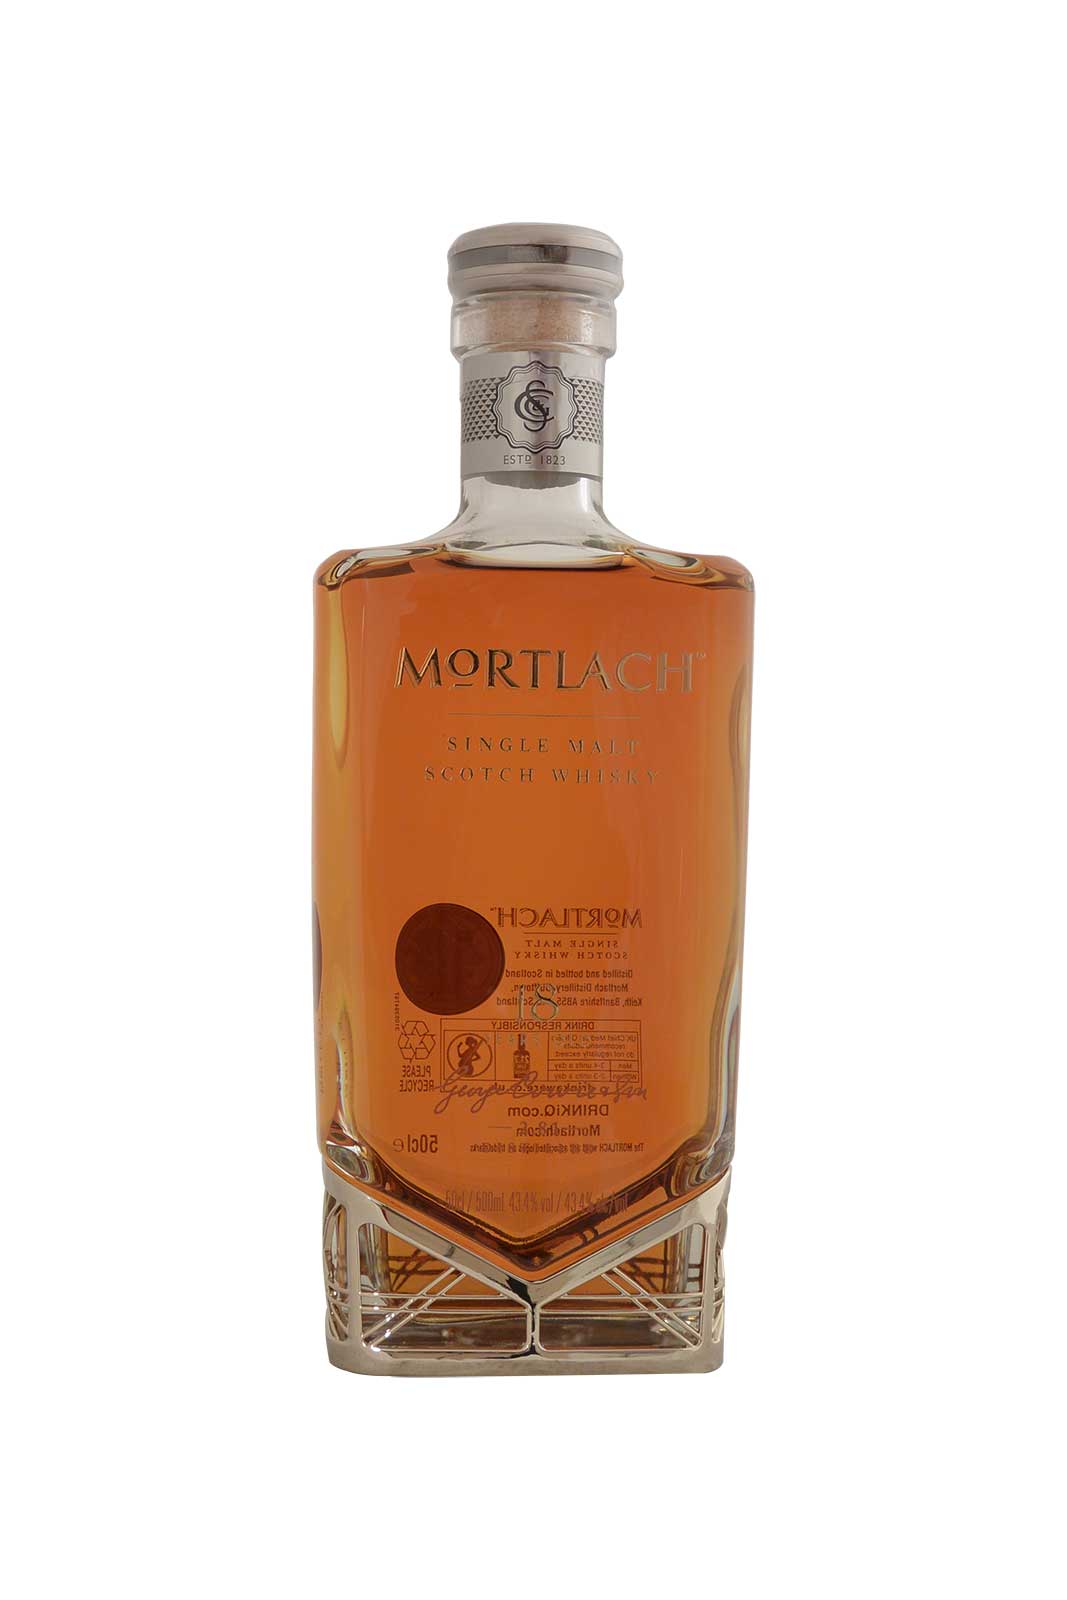 Mortlach 18 Year Old Single Malt Scotch Whisky (2014 Release)